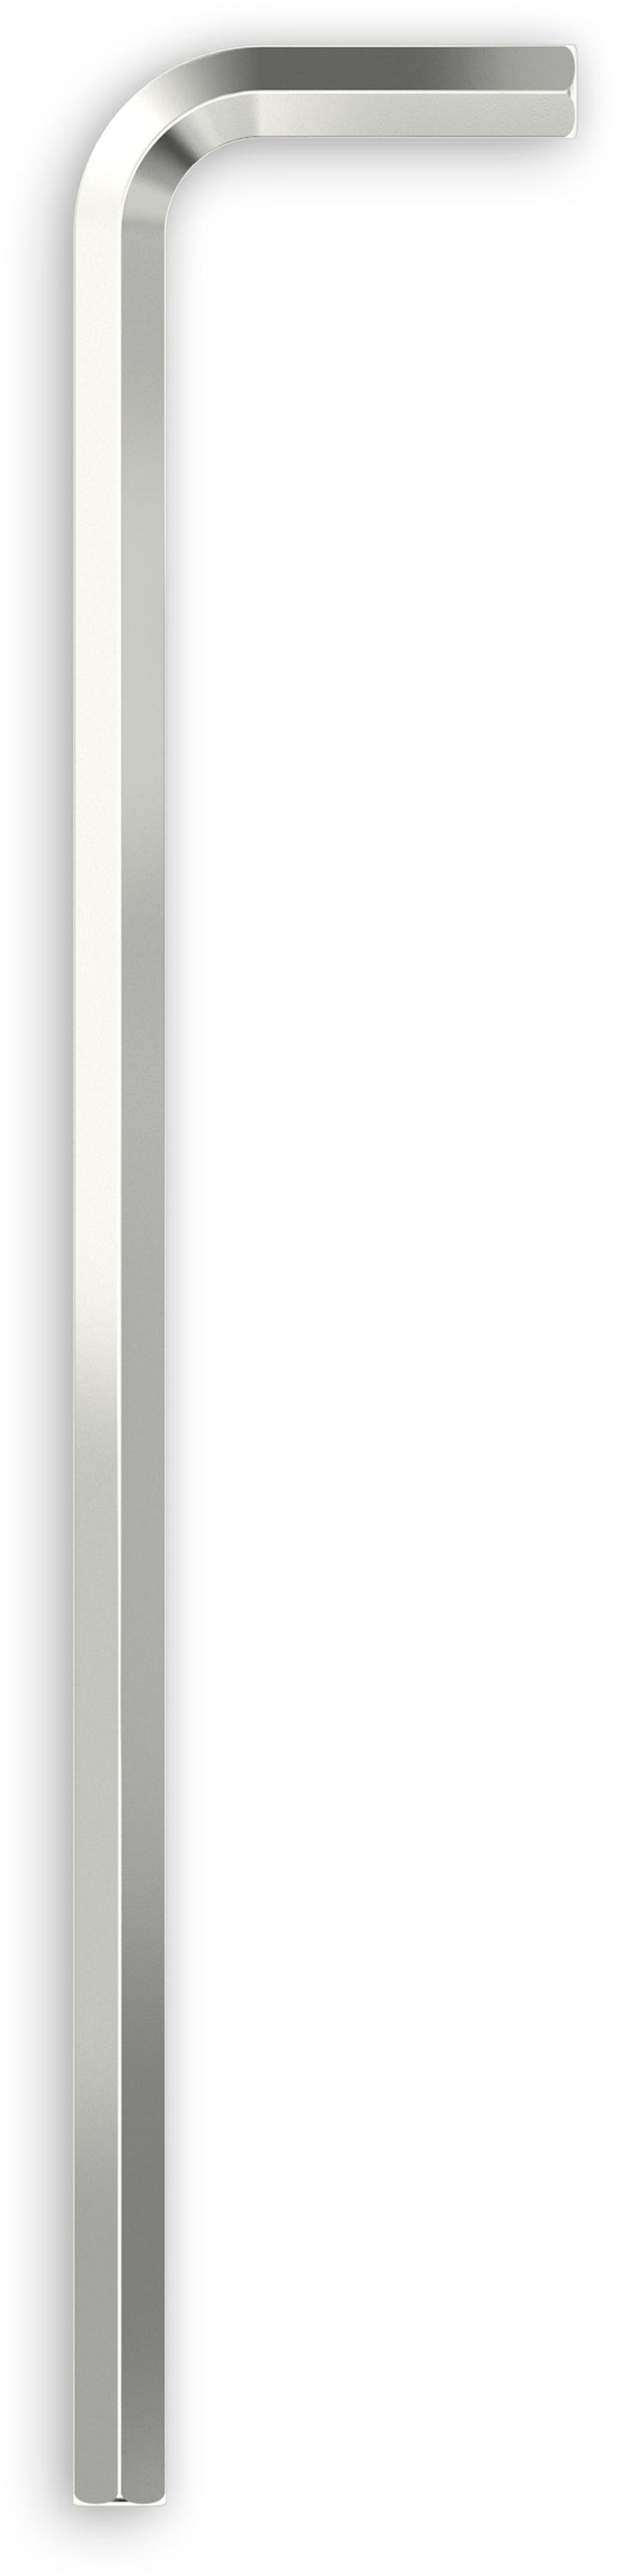 Felo Innensechskant Schlüssel lang mit Kugelkopf 365 HEX 1,5 x 91,5 mm Sechskant Schlüssel Hexagon | Winkelschlüssel extra lang - Serie 365 (FL-36501510) Bild-01